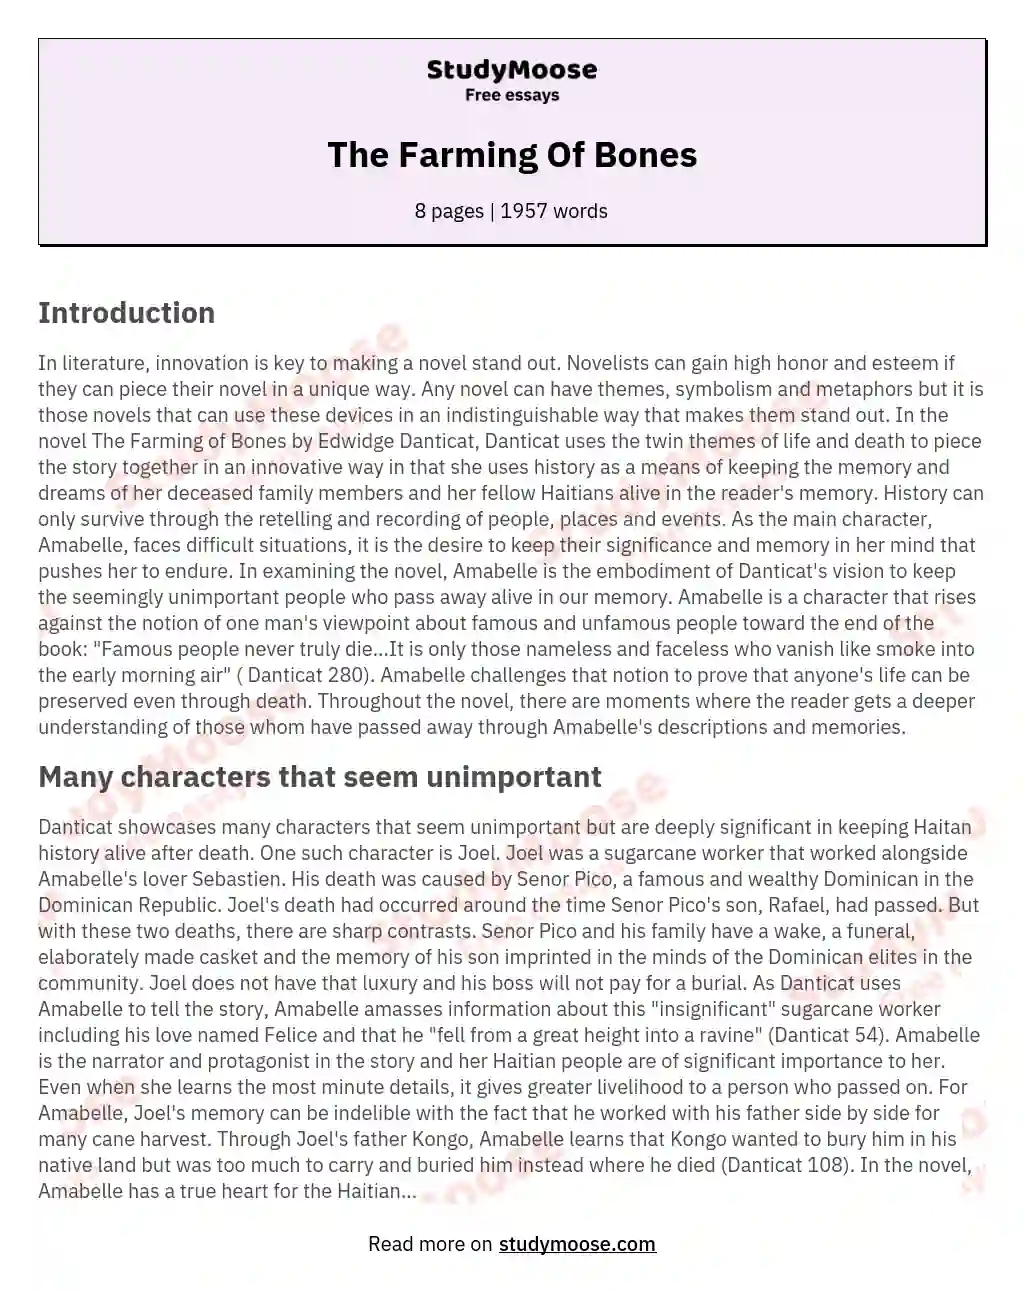 The Farming Of Bones essay